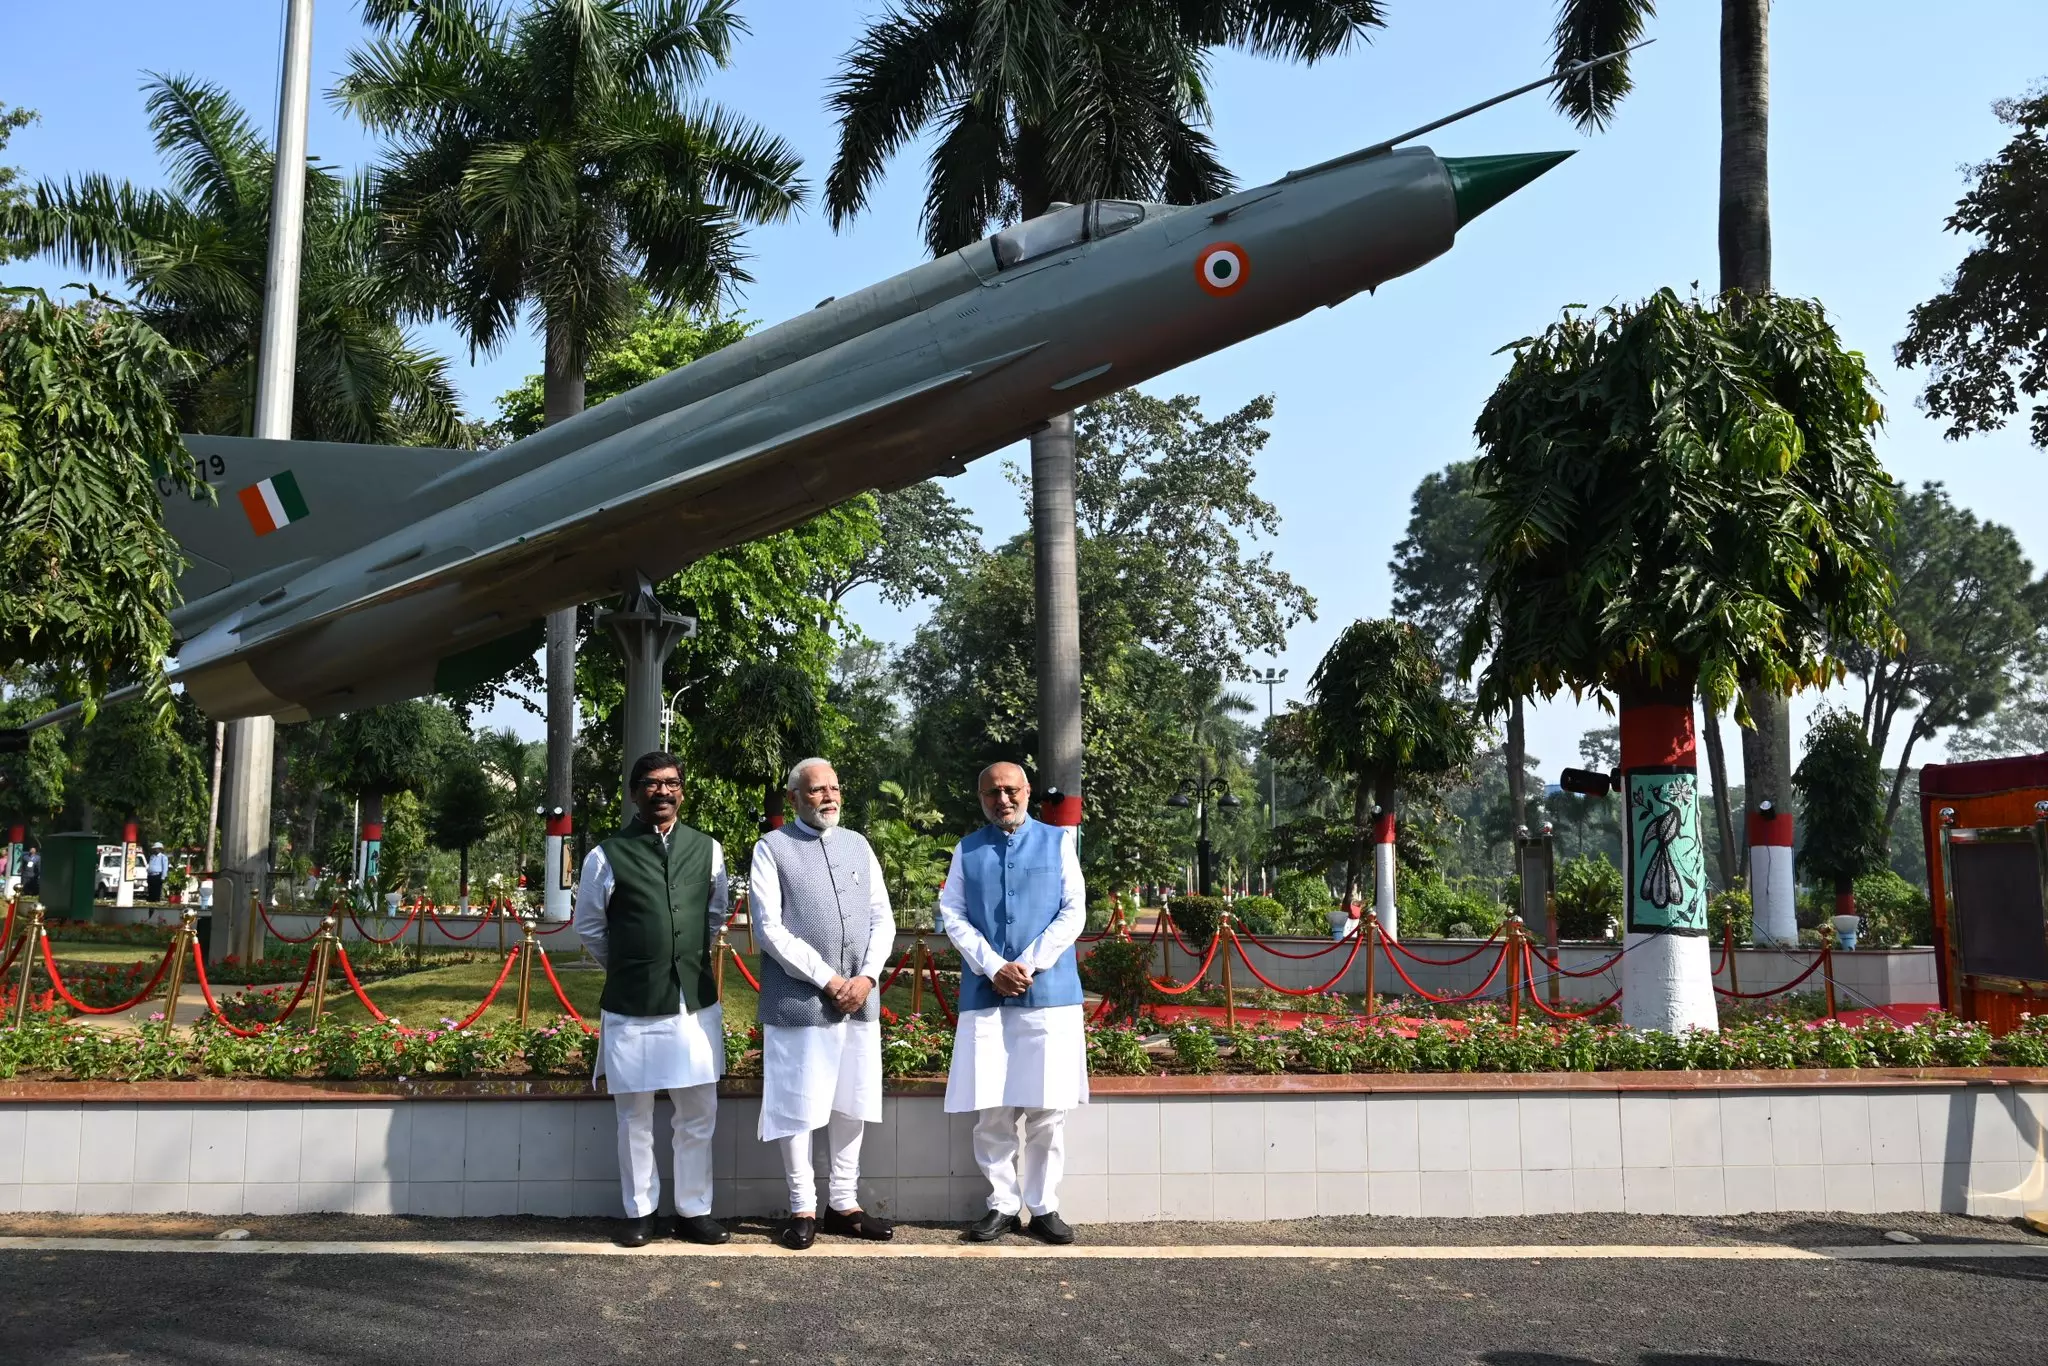 PM Modi unveils MiG-211 fighter jet used in 1971 Liberation War at Raj Bhavan in Ranchi